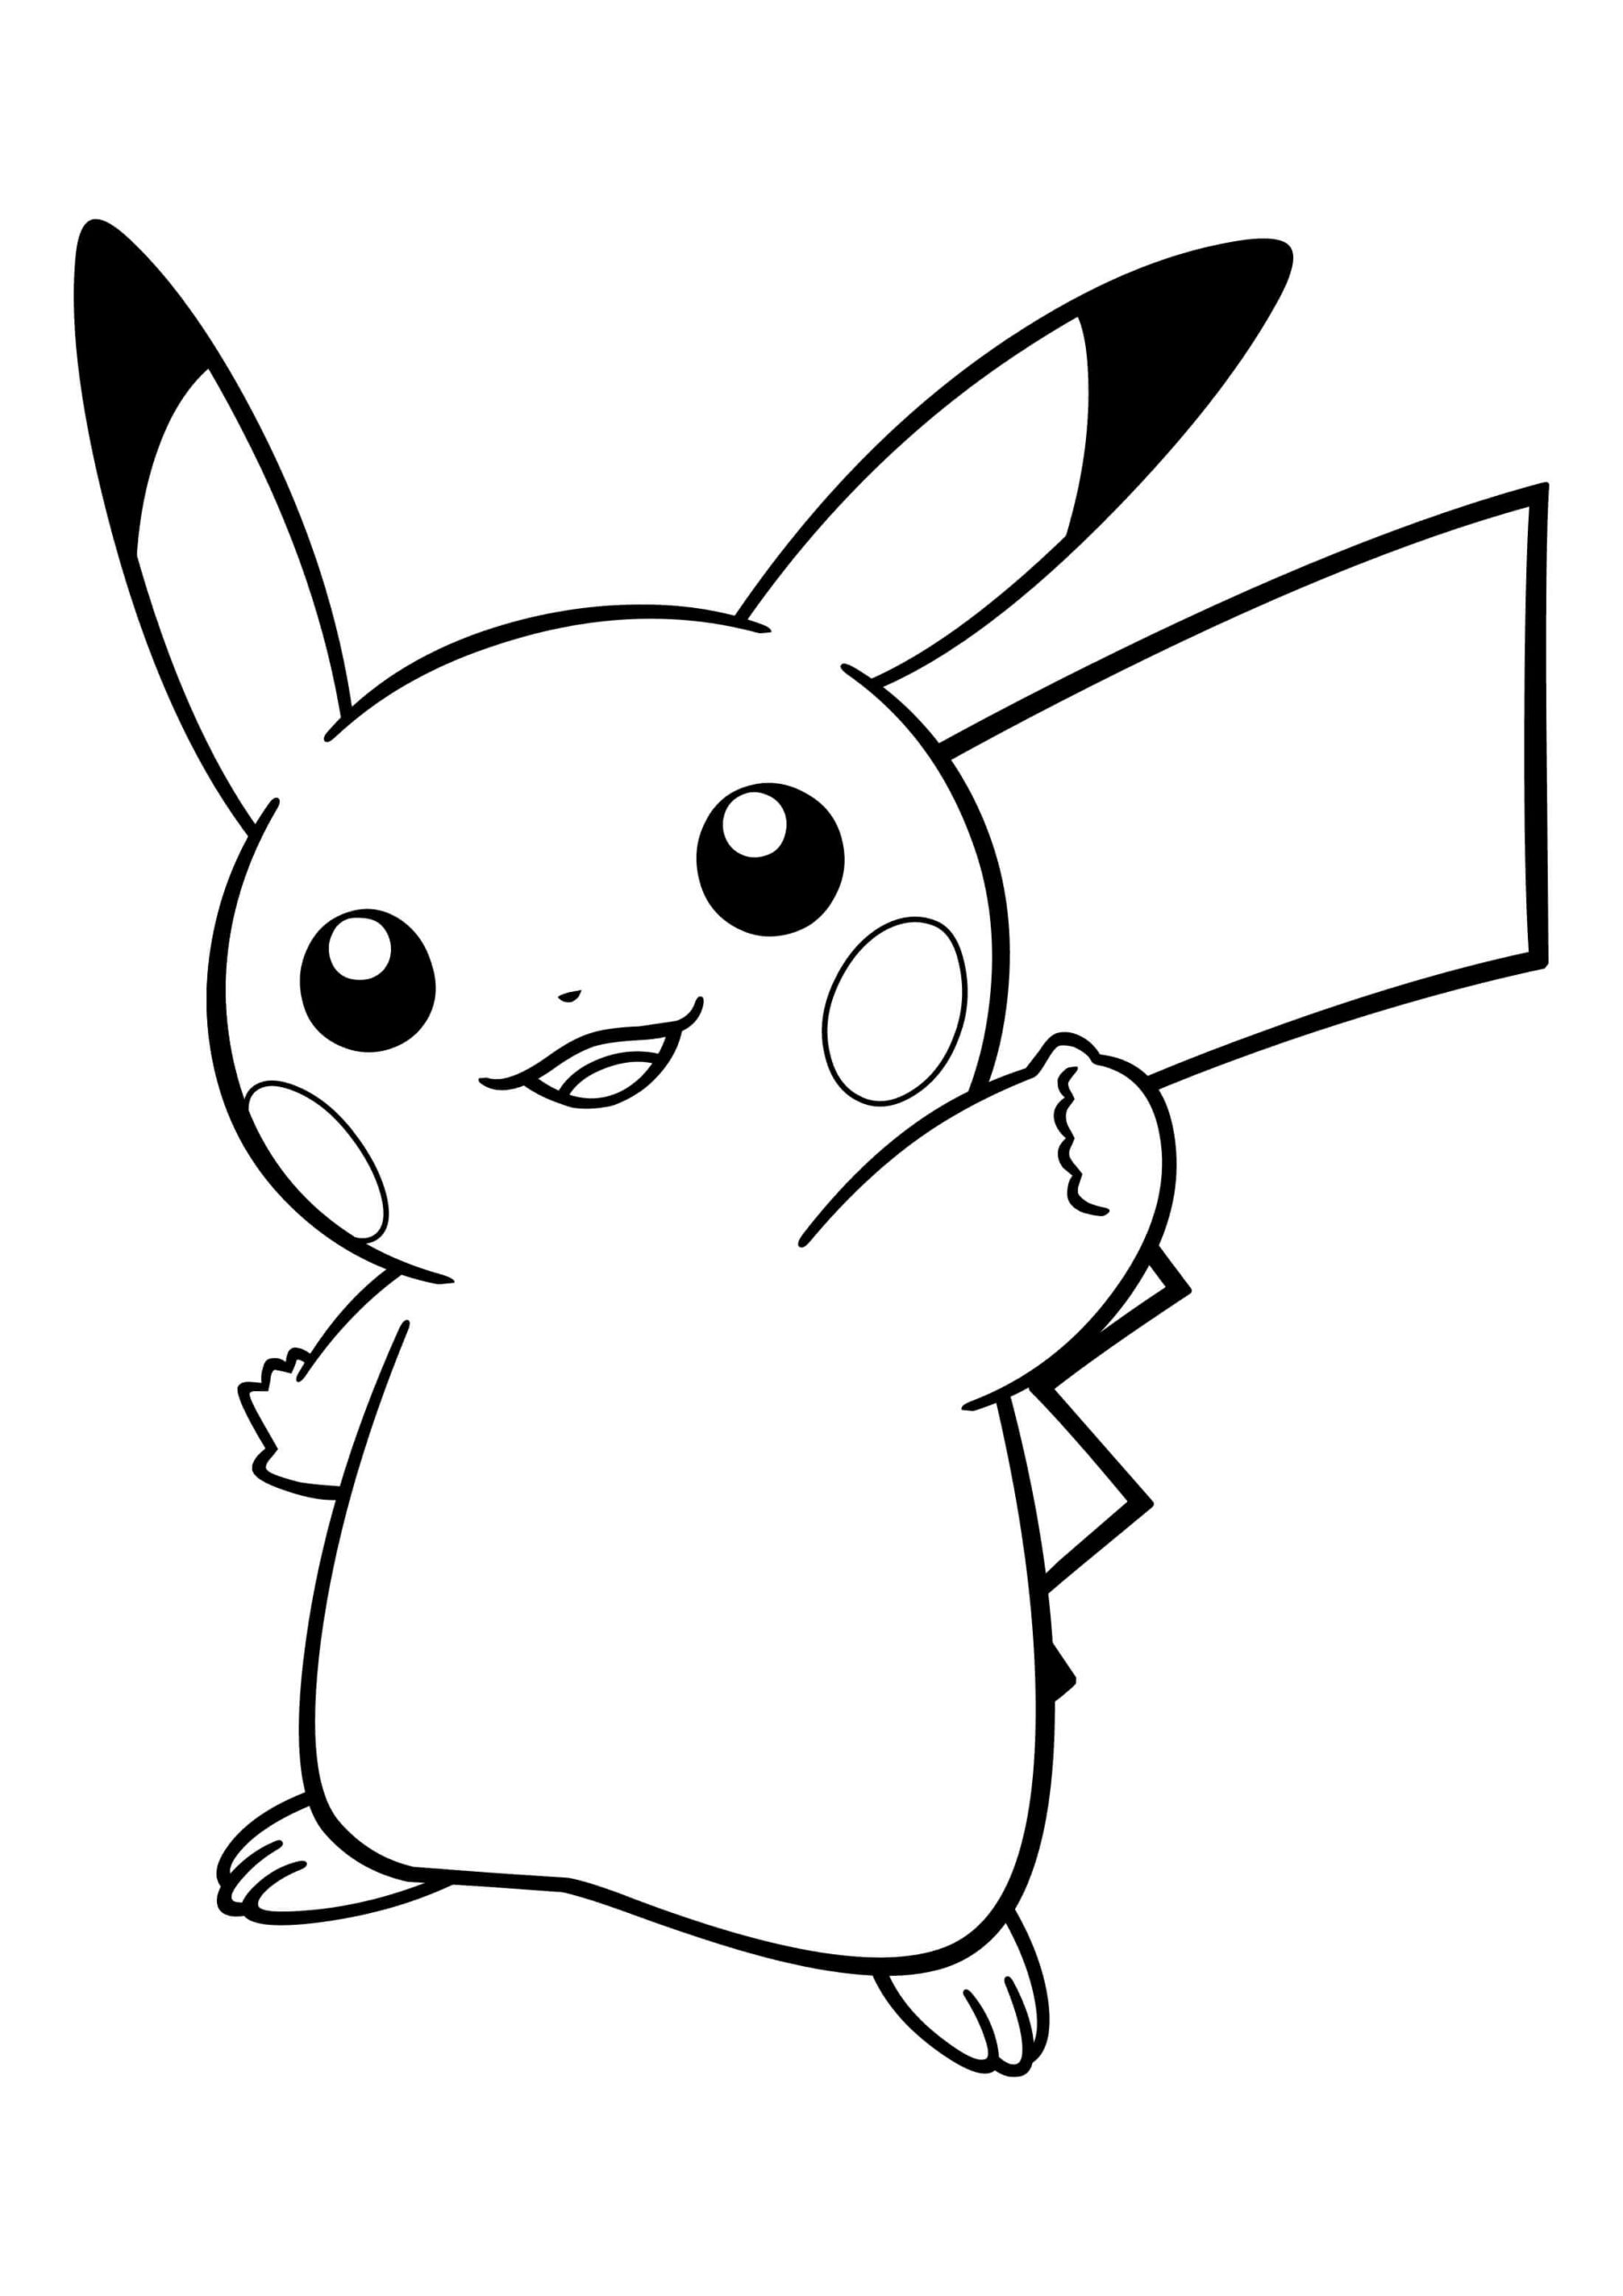 Dibujos de Divertido Pikachu para colorear